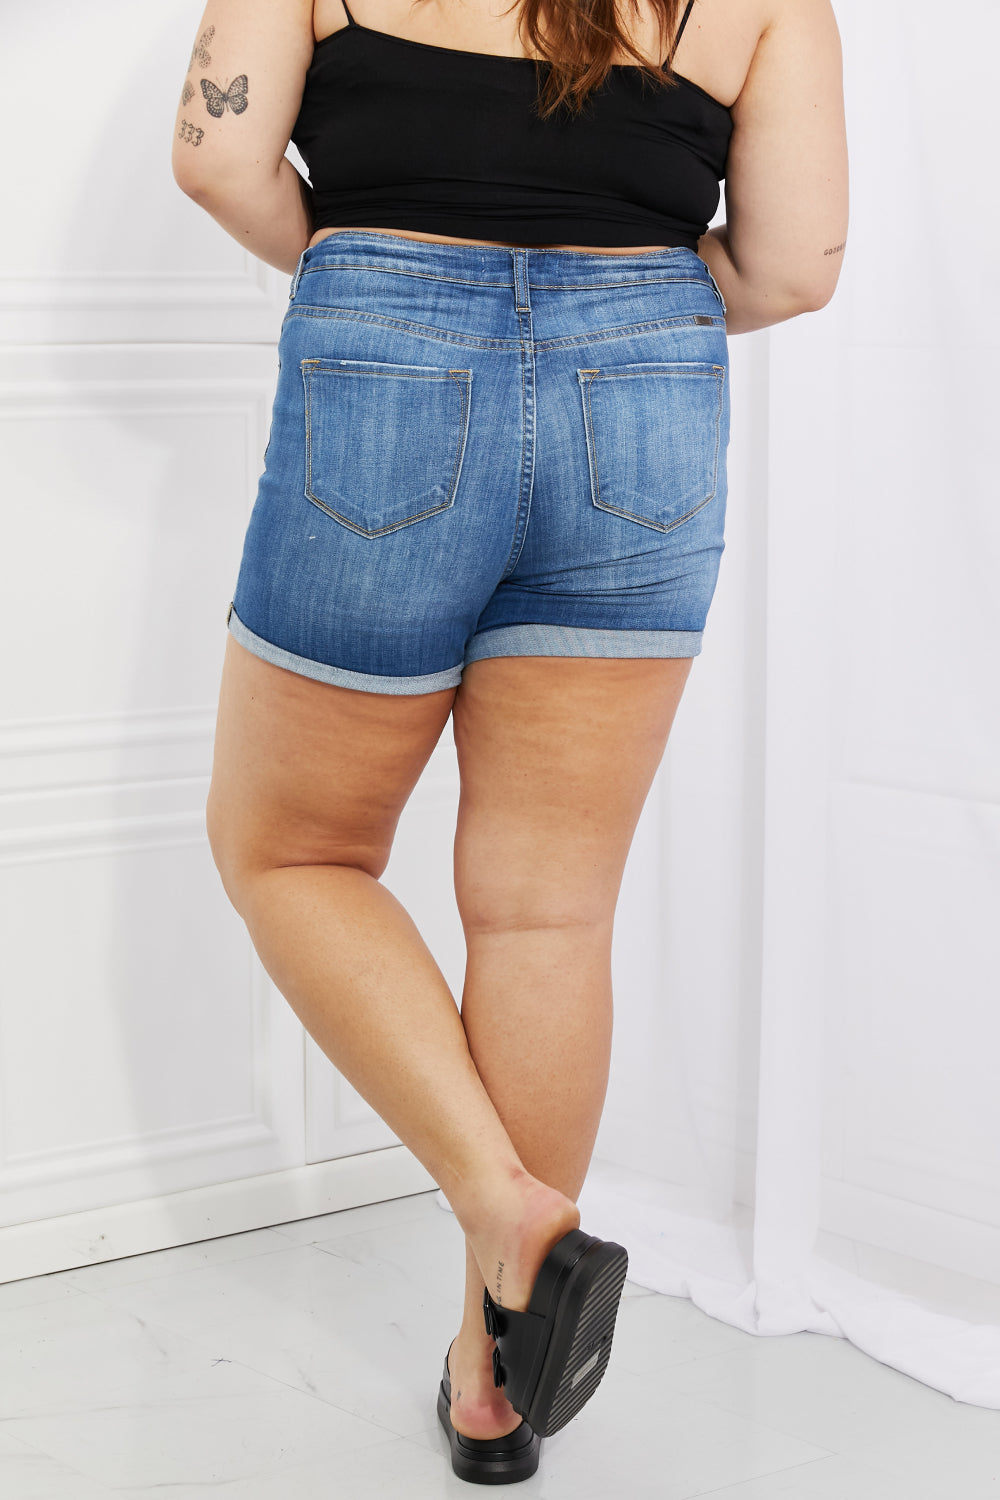 Kancan Full Size High Rise Medium Stone Wash Denim Shorts - The Beauty Alley Boutique Inc